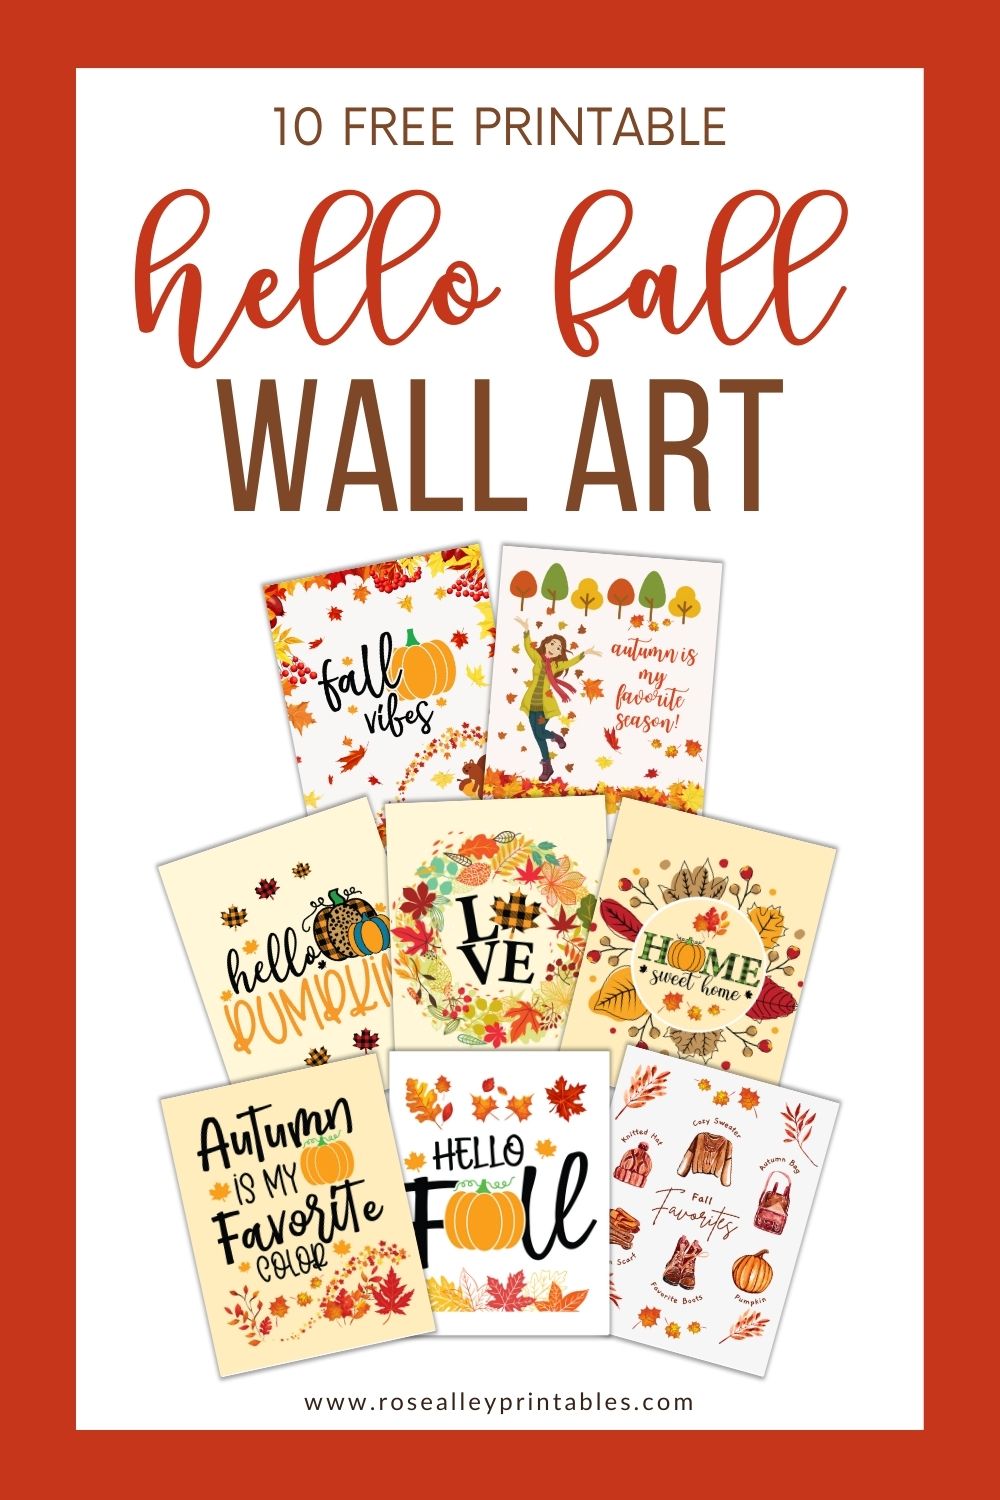 free printable hello wall art